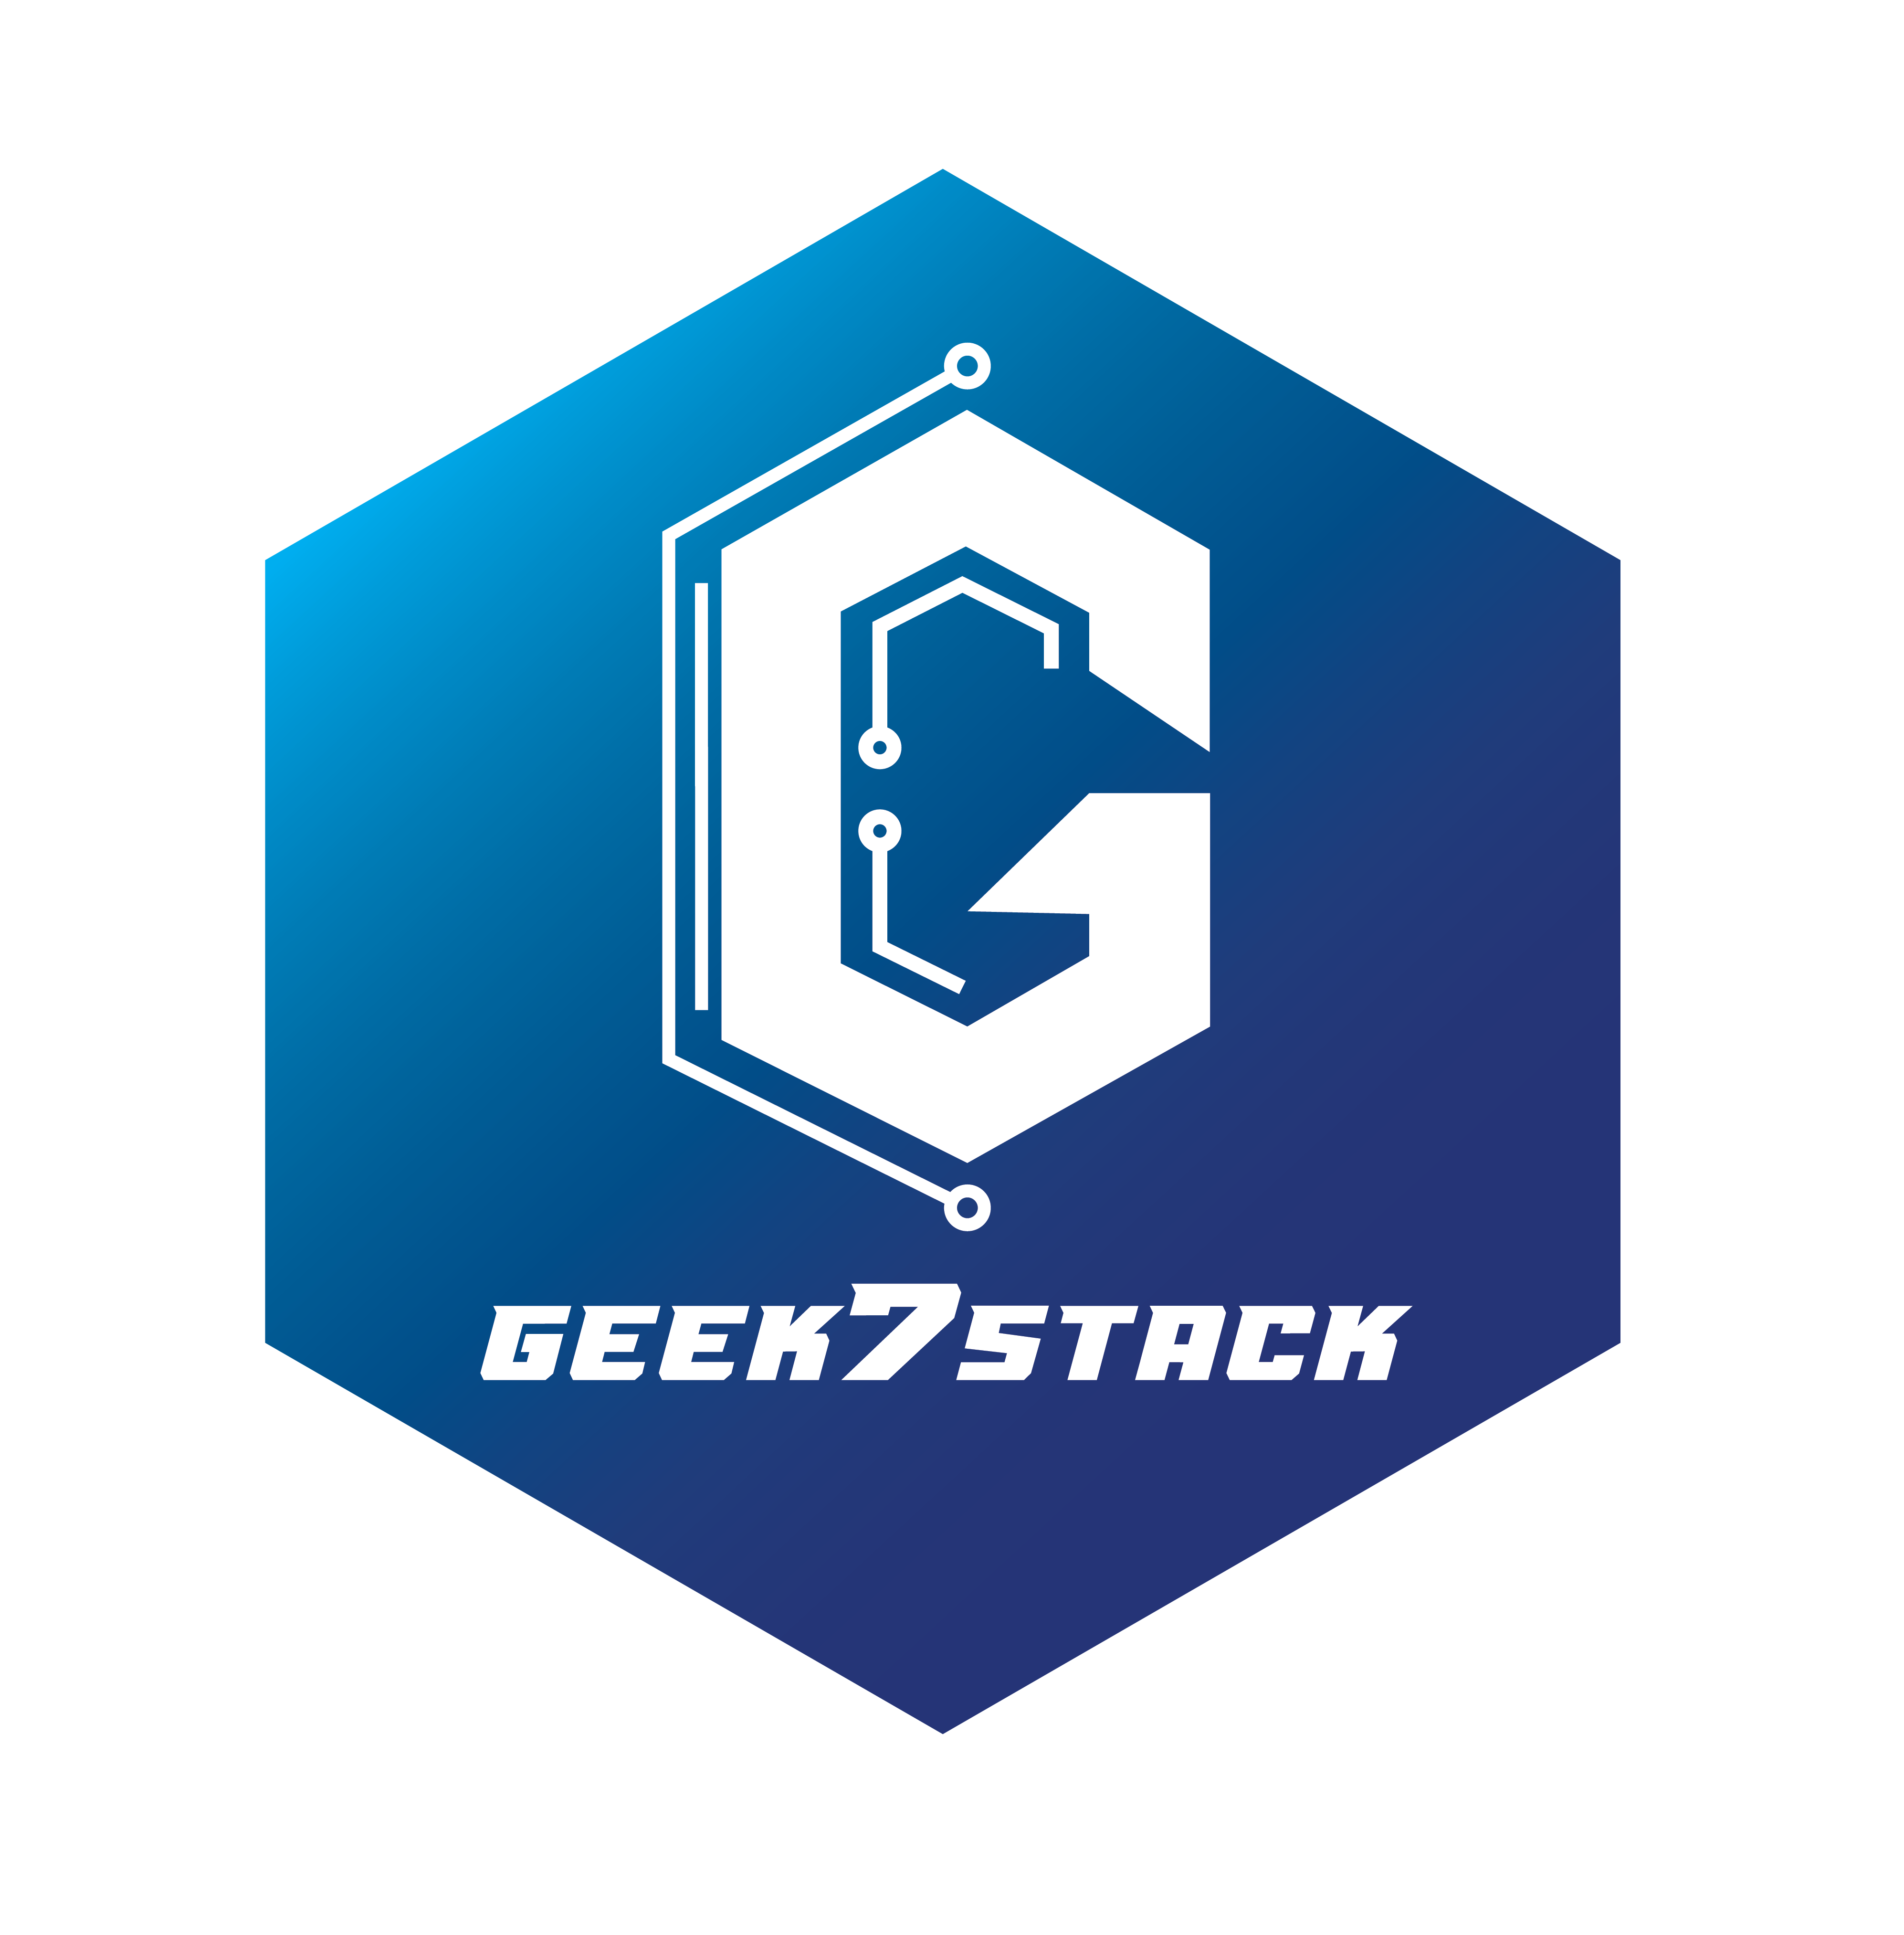 Geek7Stack co.,ltd